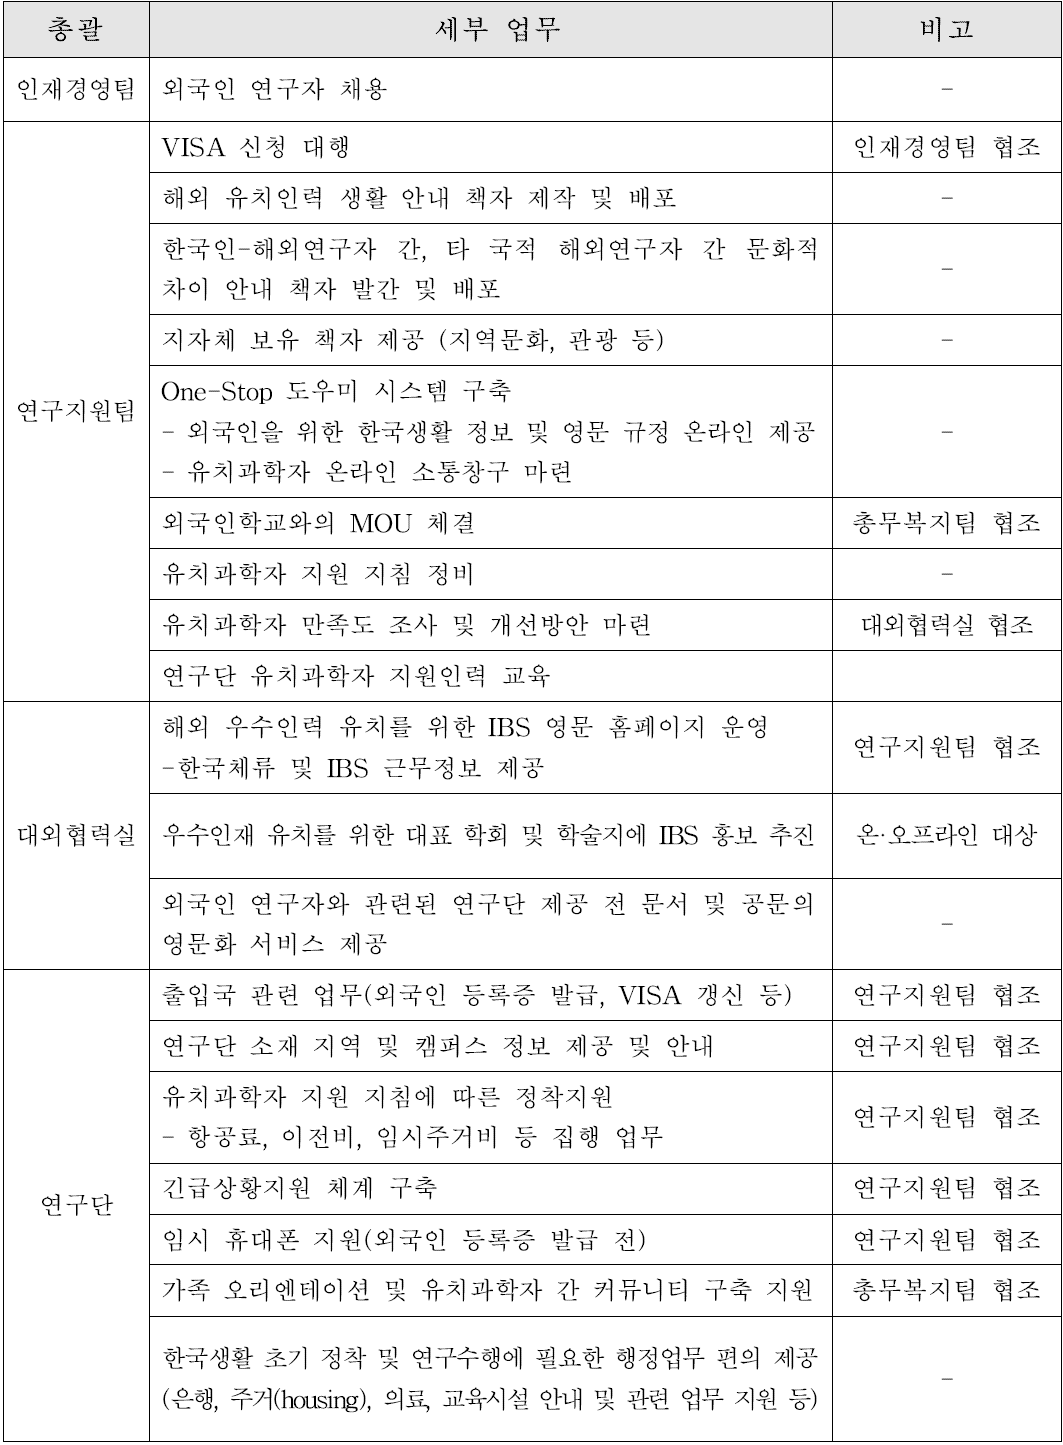 IBS 글로벌 헬프데스크 TF팀 세부 업무 분장